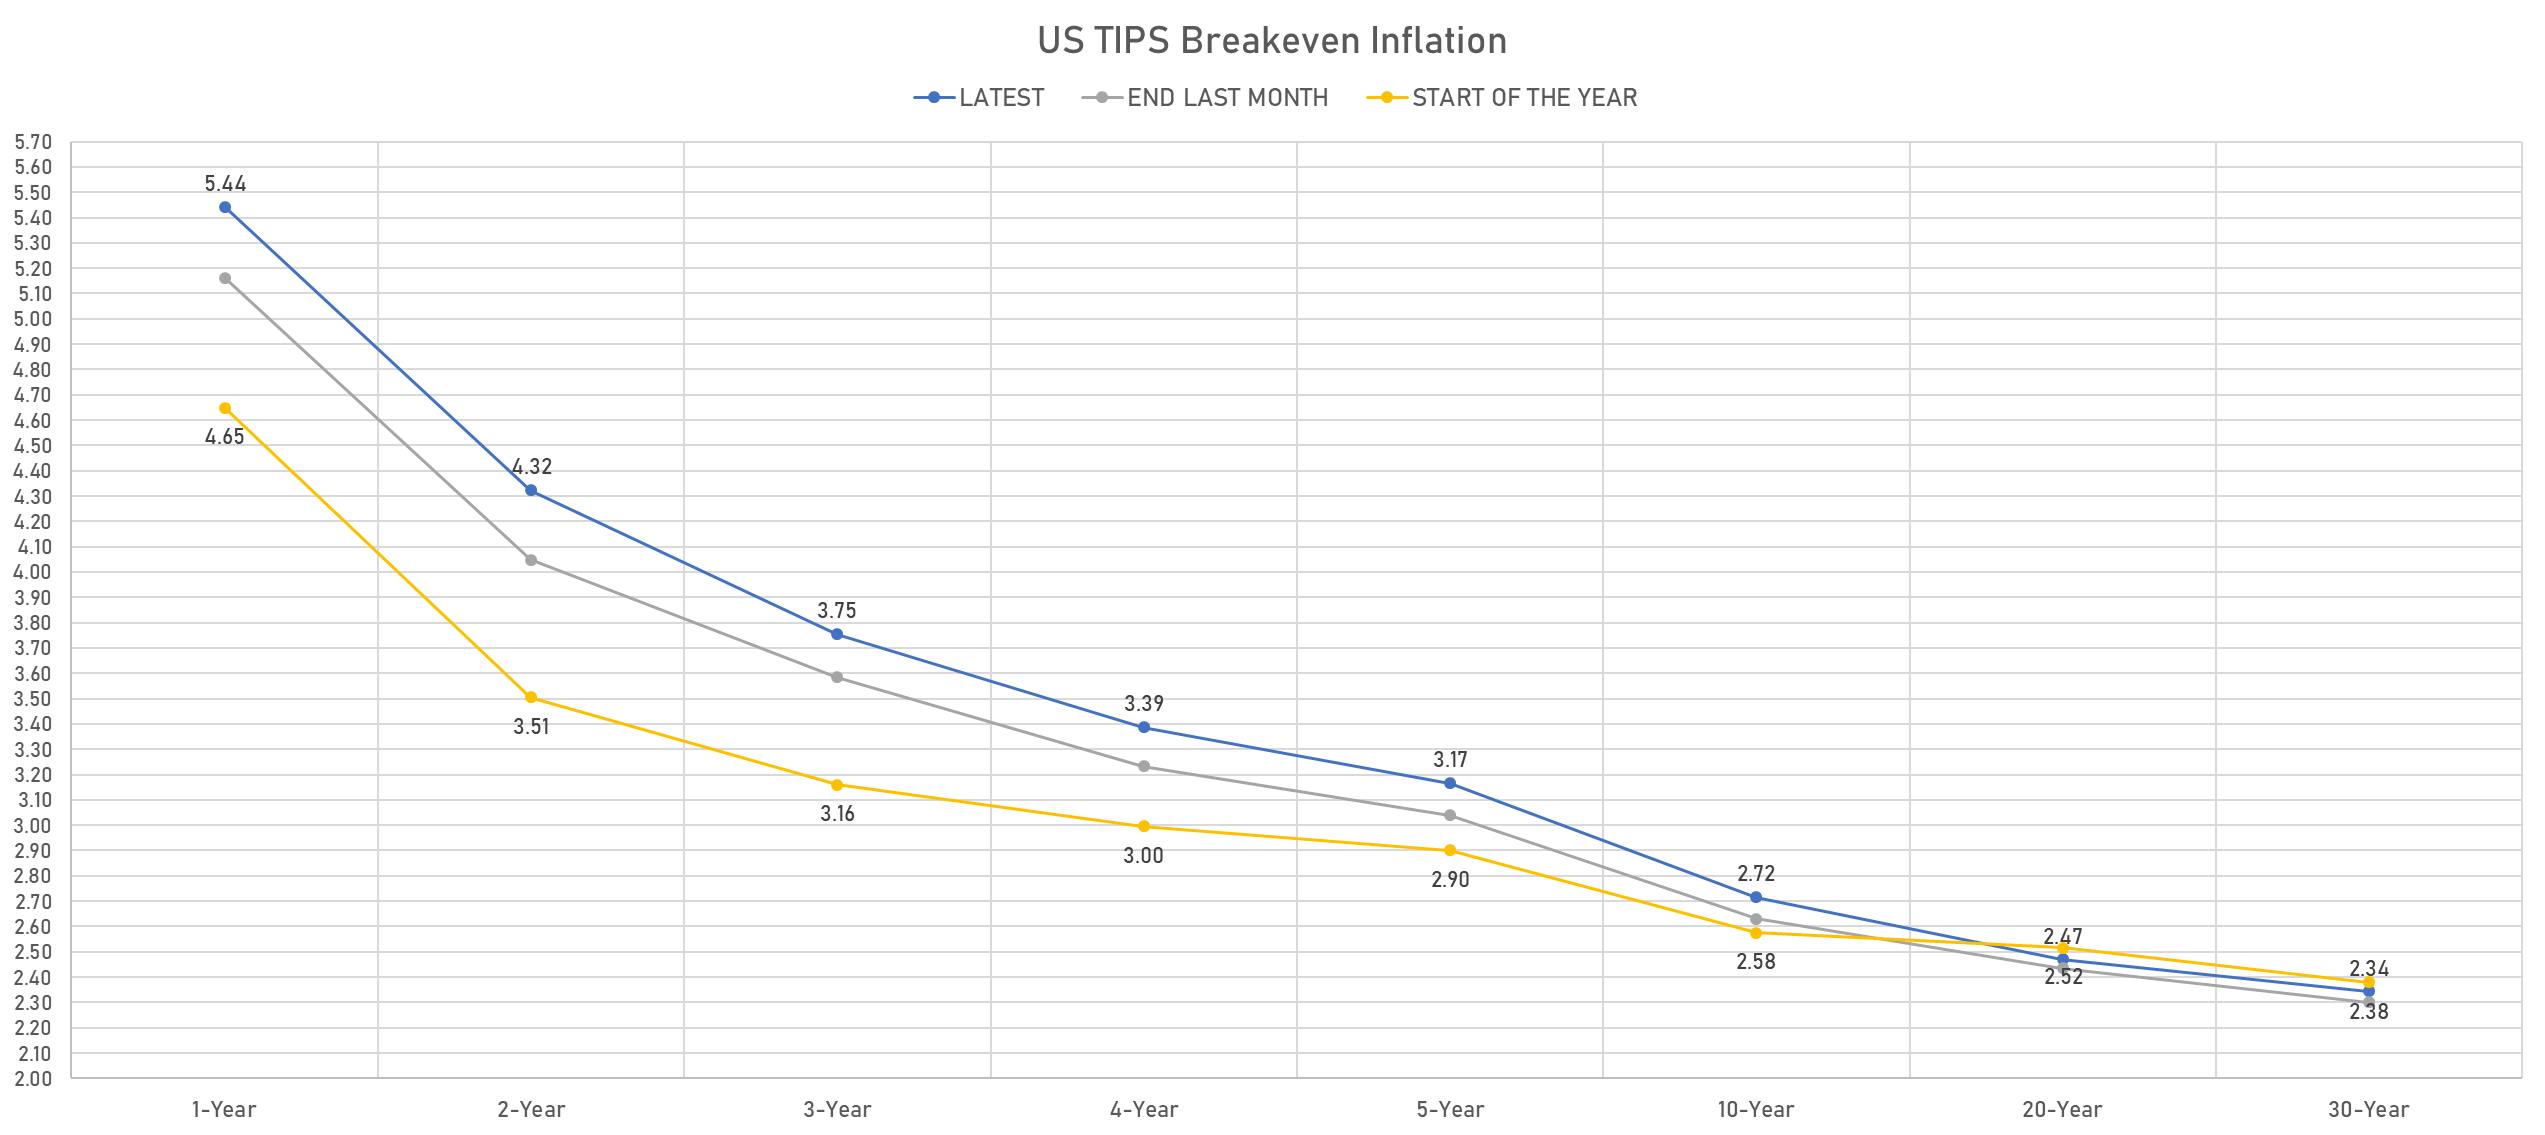 US TIPS Breakevens | Sources: phipost.com, Refinitiv data